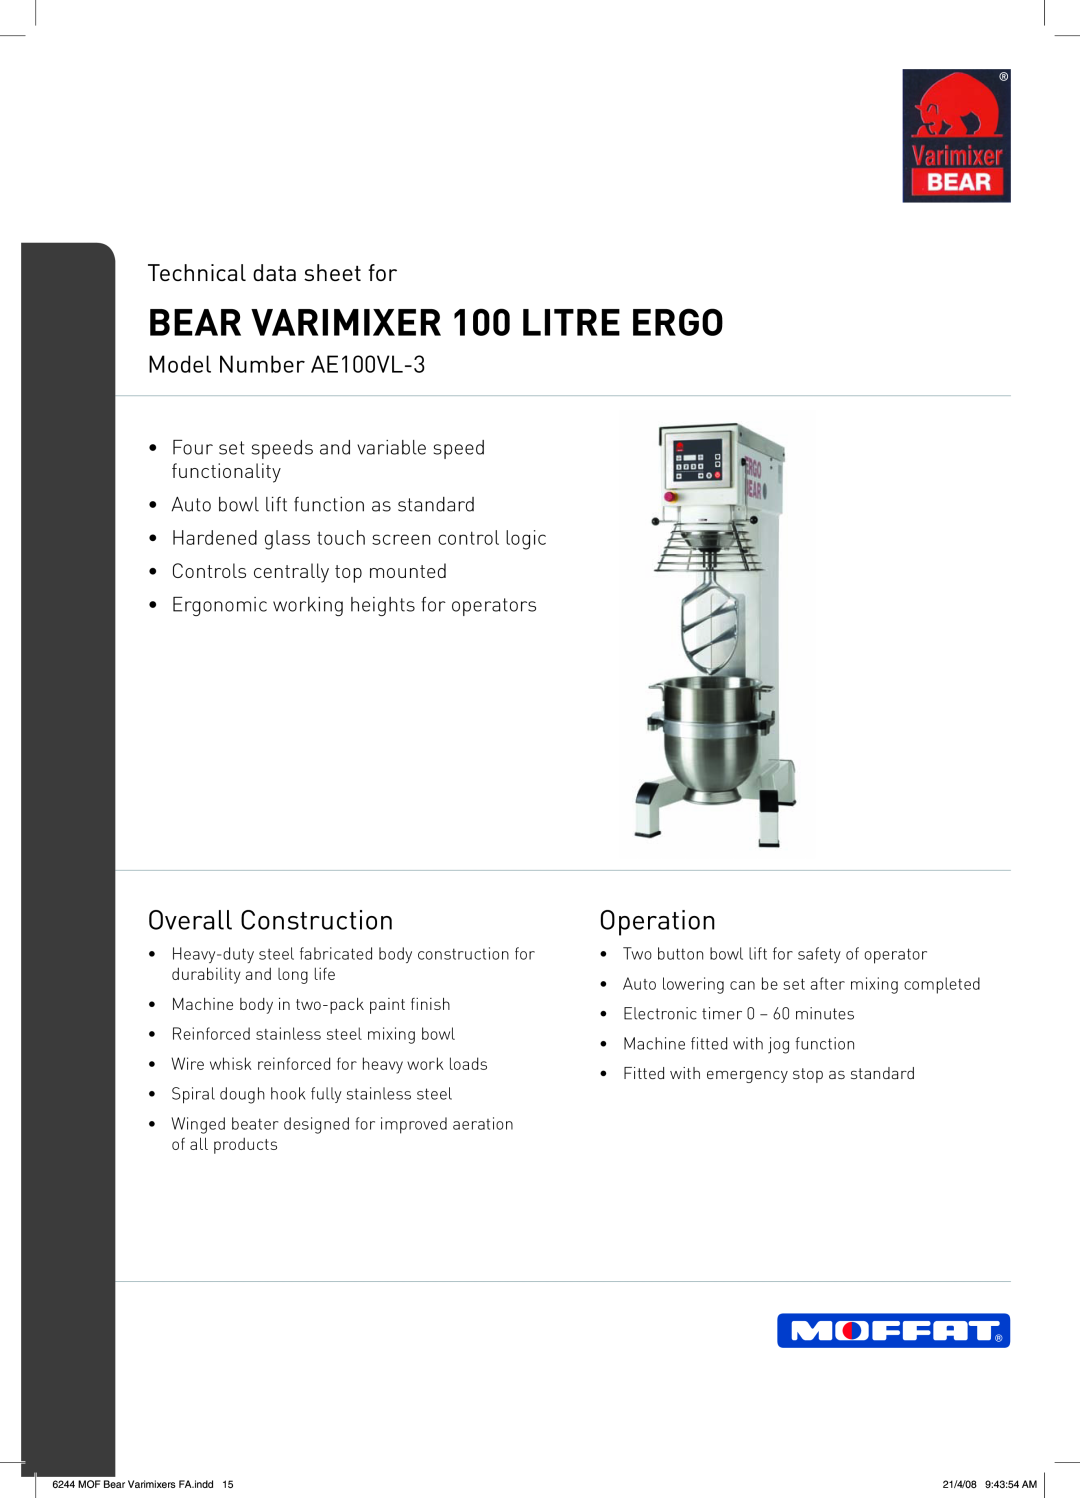 Moffat manual BEAR VARIMIXER 100 LITRE ERGO, Technical data sheet for, Model Number AE100VL-3, Overall Construction 